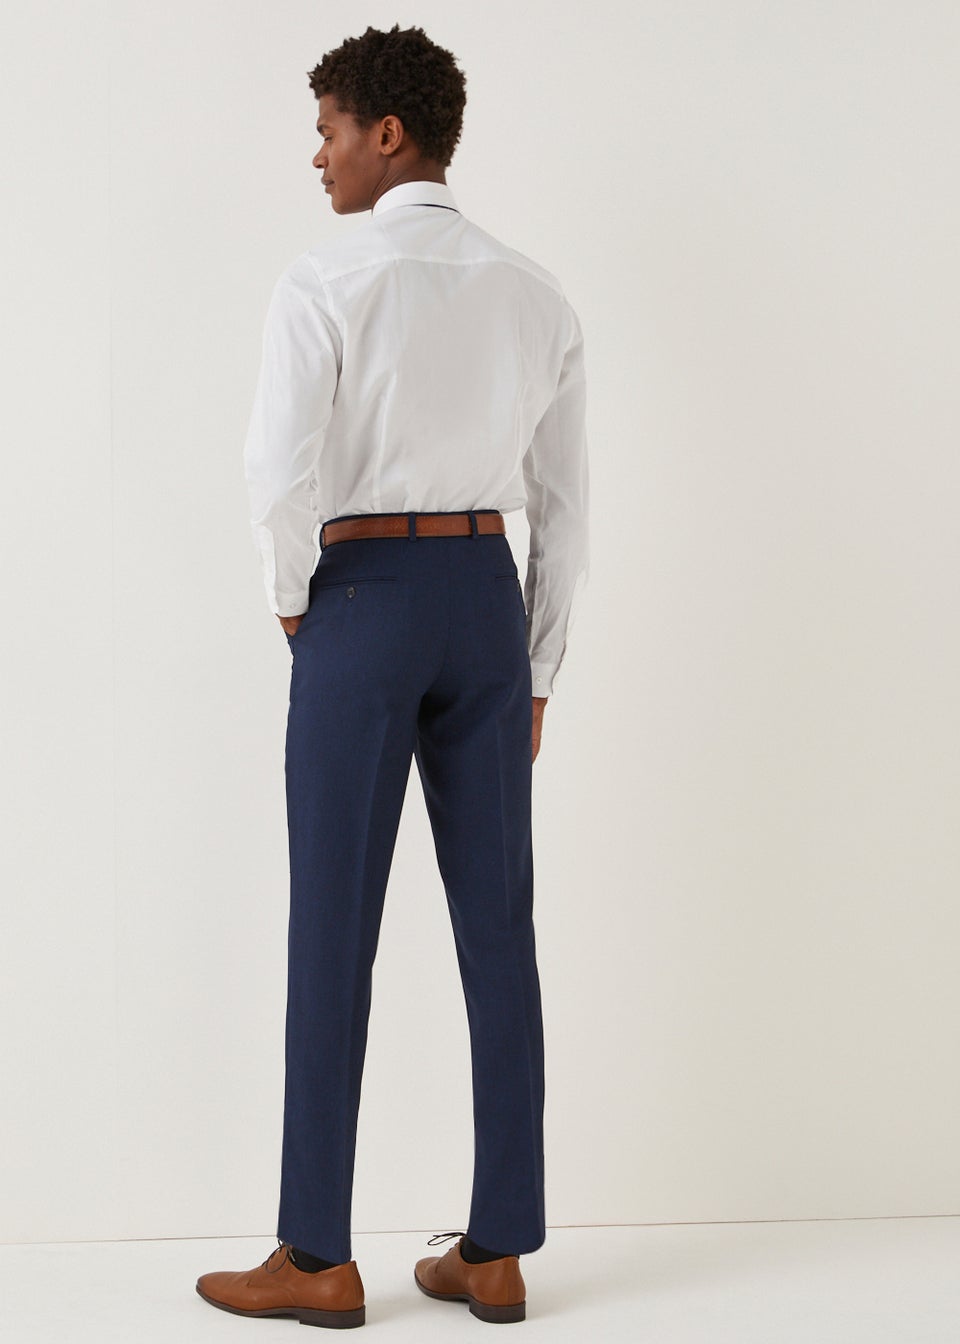 Buy Men Navy Solid Slim Fit Formal Trousers Online  701927  Peter England